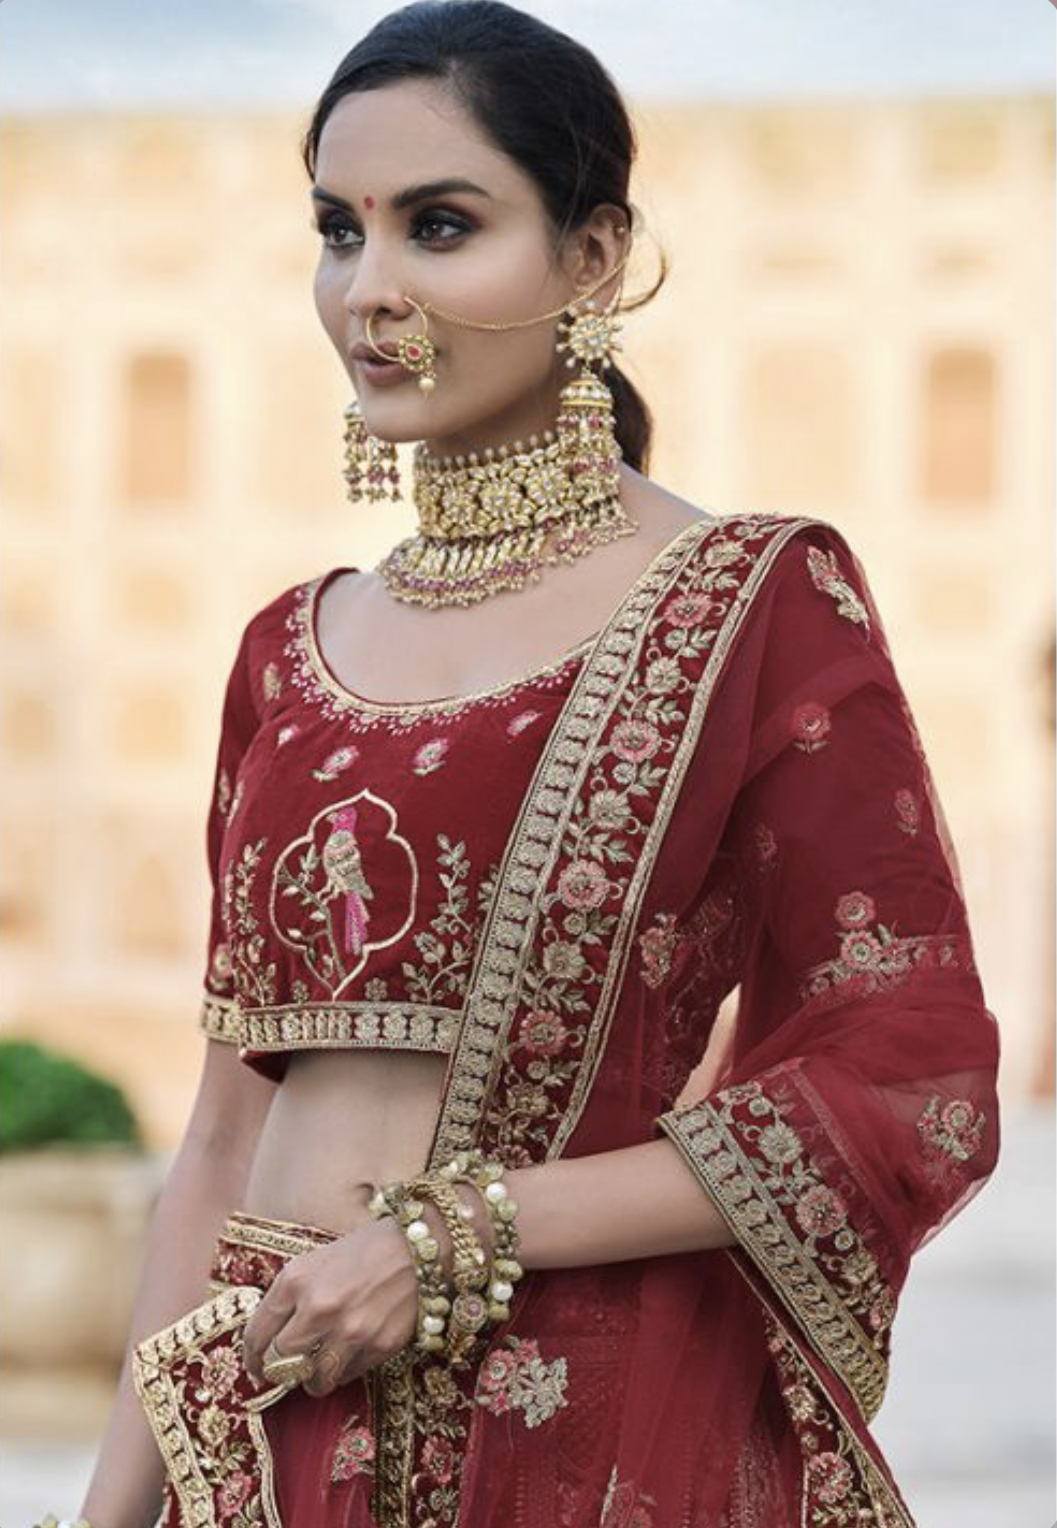 Photo of heavy bridal jewellery with maroon lehenga